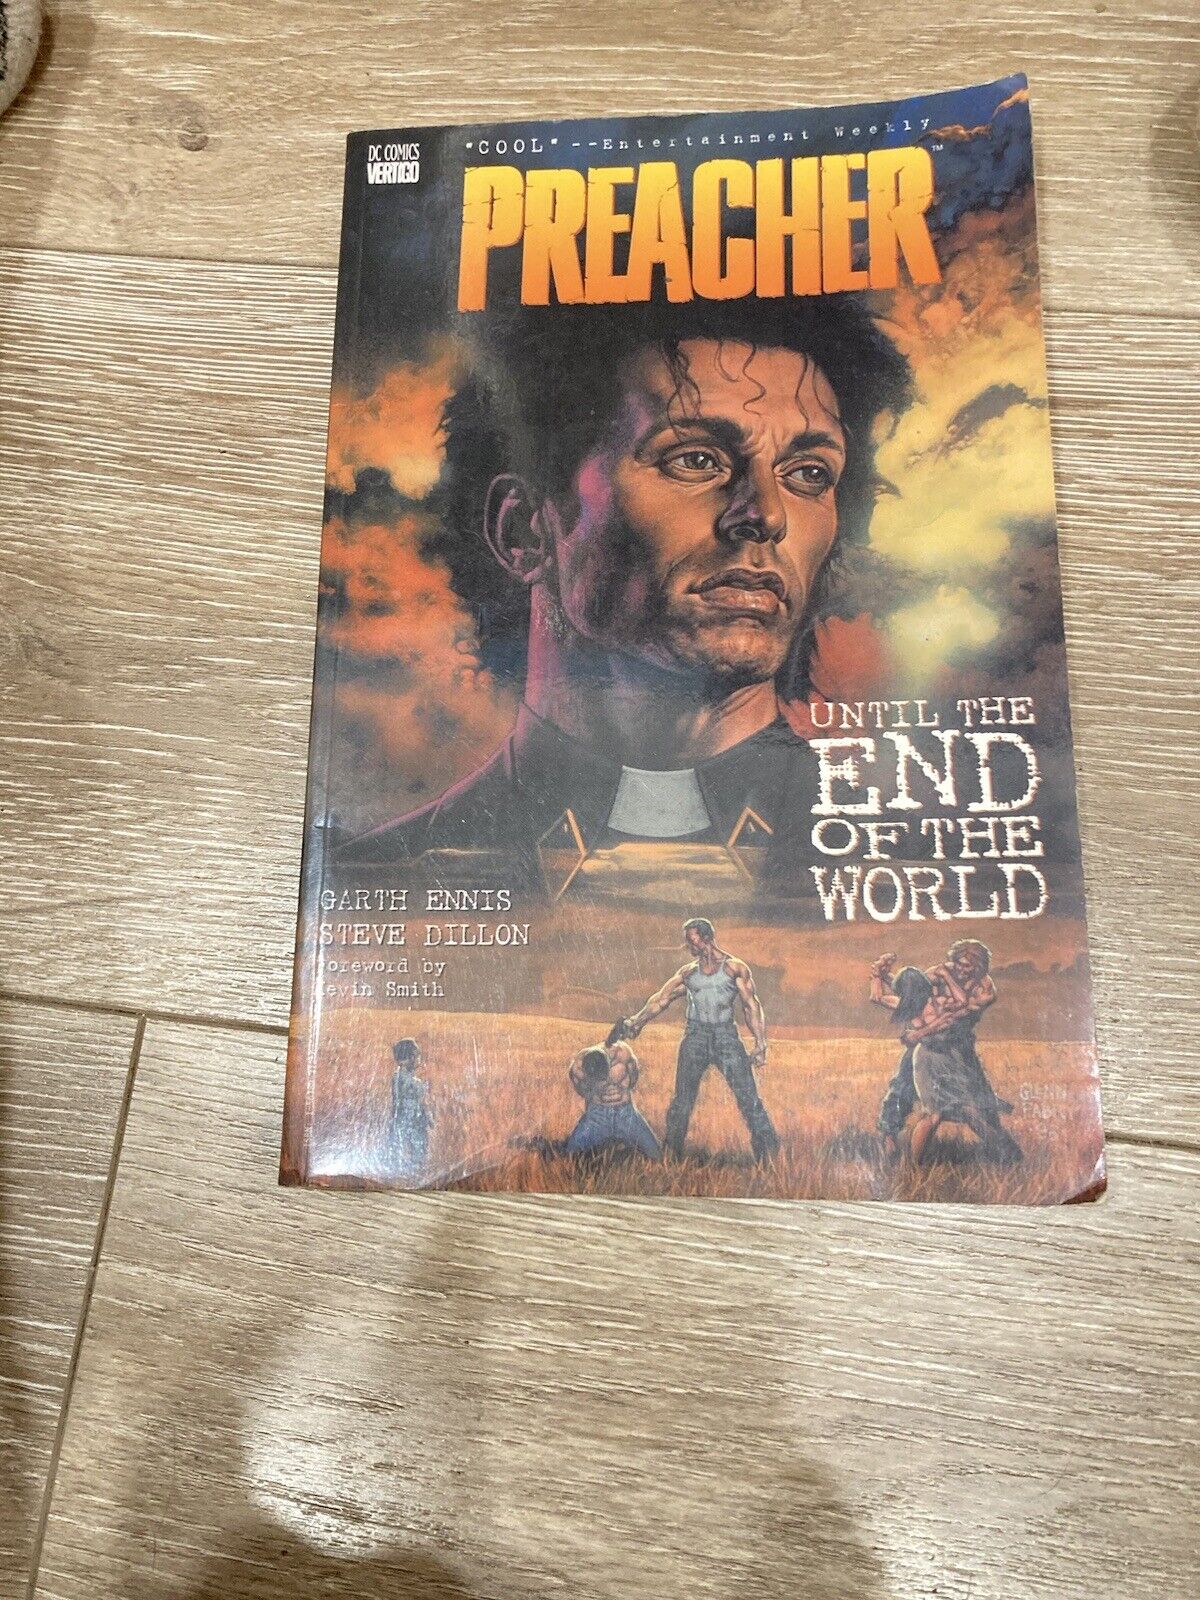 Preacher #2 (DC Comics, February 1997)